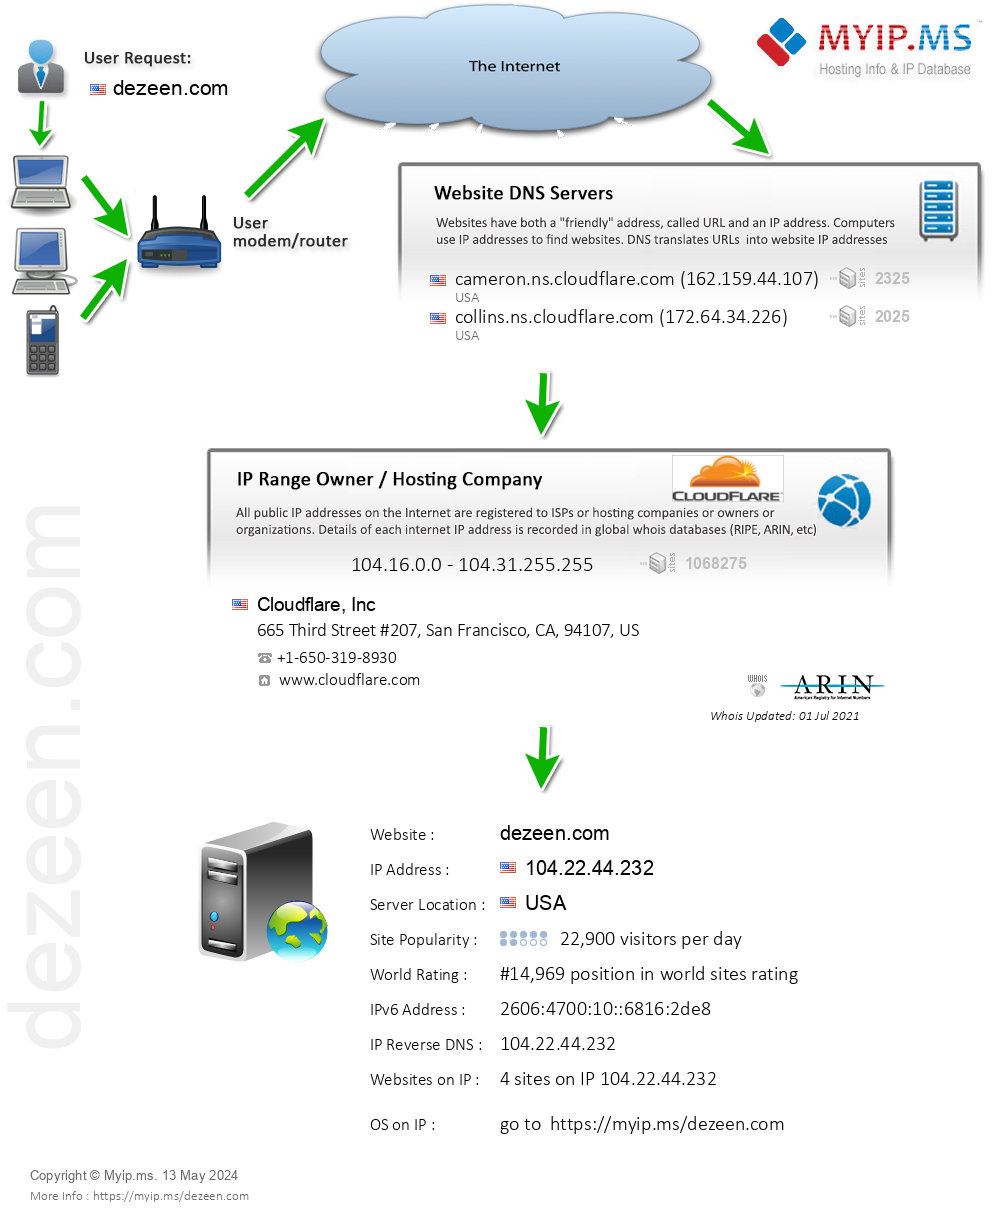 Dezeen.com - Website Hosting Visual IP Diagram